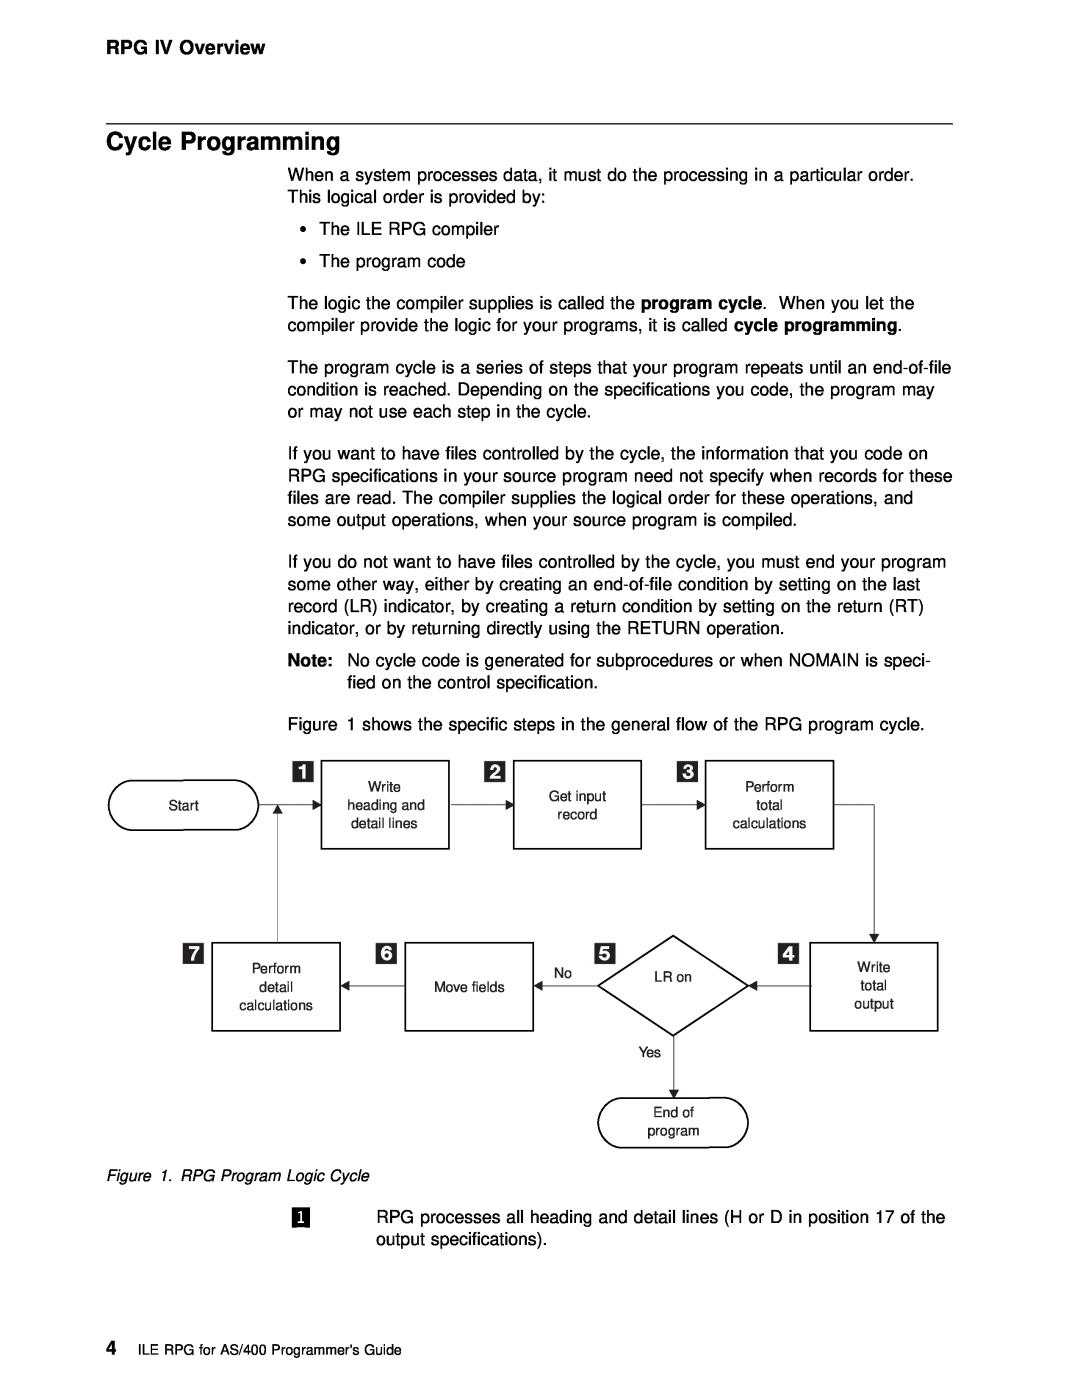 IBM AS/400 manual Cycle Programming, RPG IV Overview, RPG Program Logic Cycle 